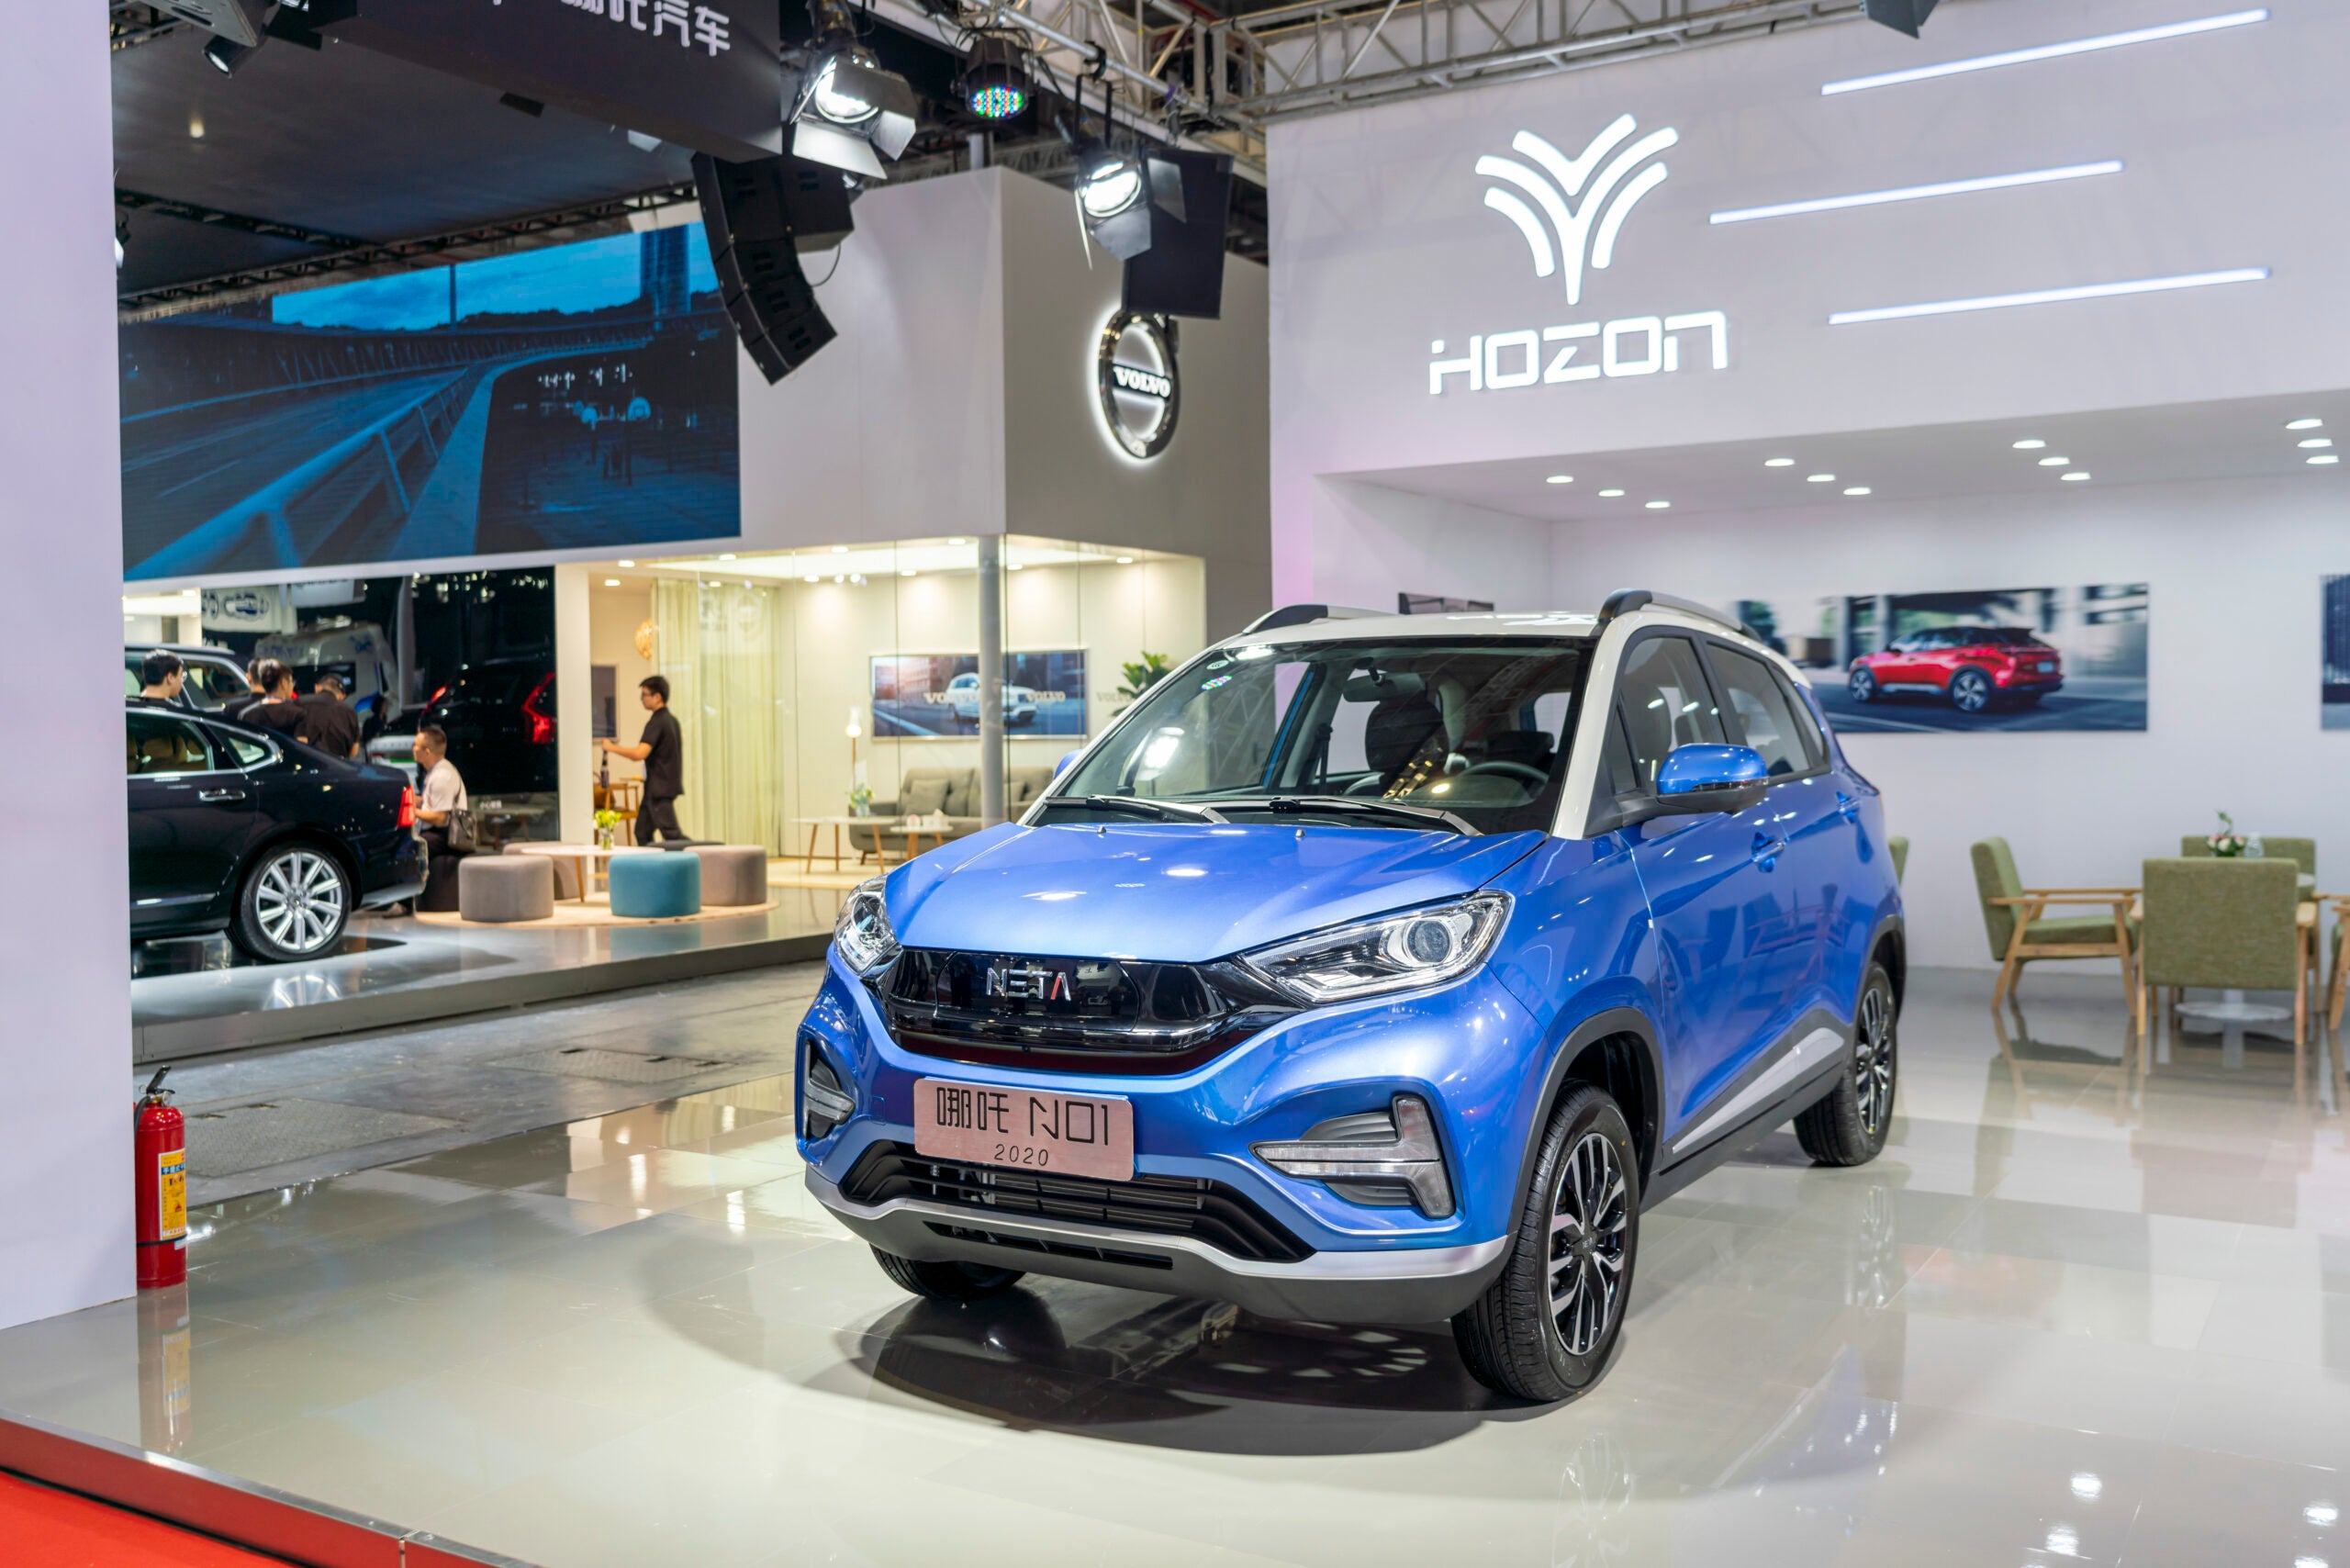 Huawei accelerates car-making ambitions with Hozon Auto partnership